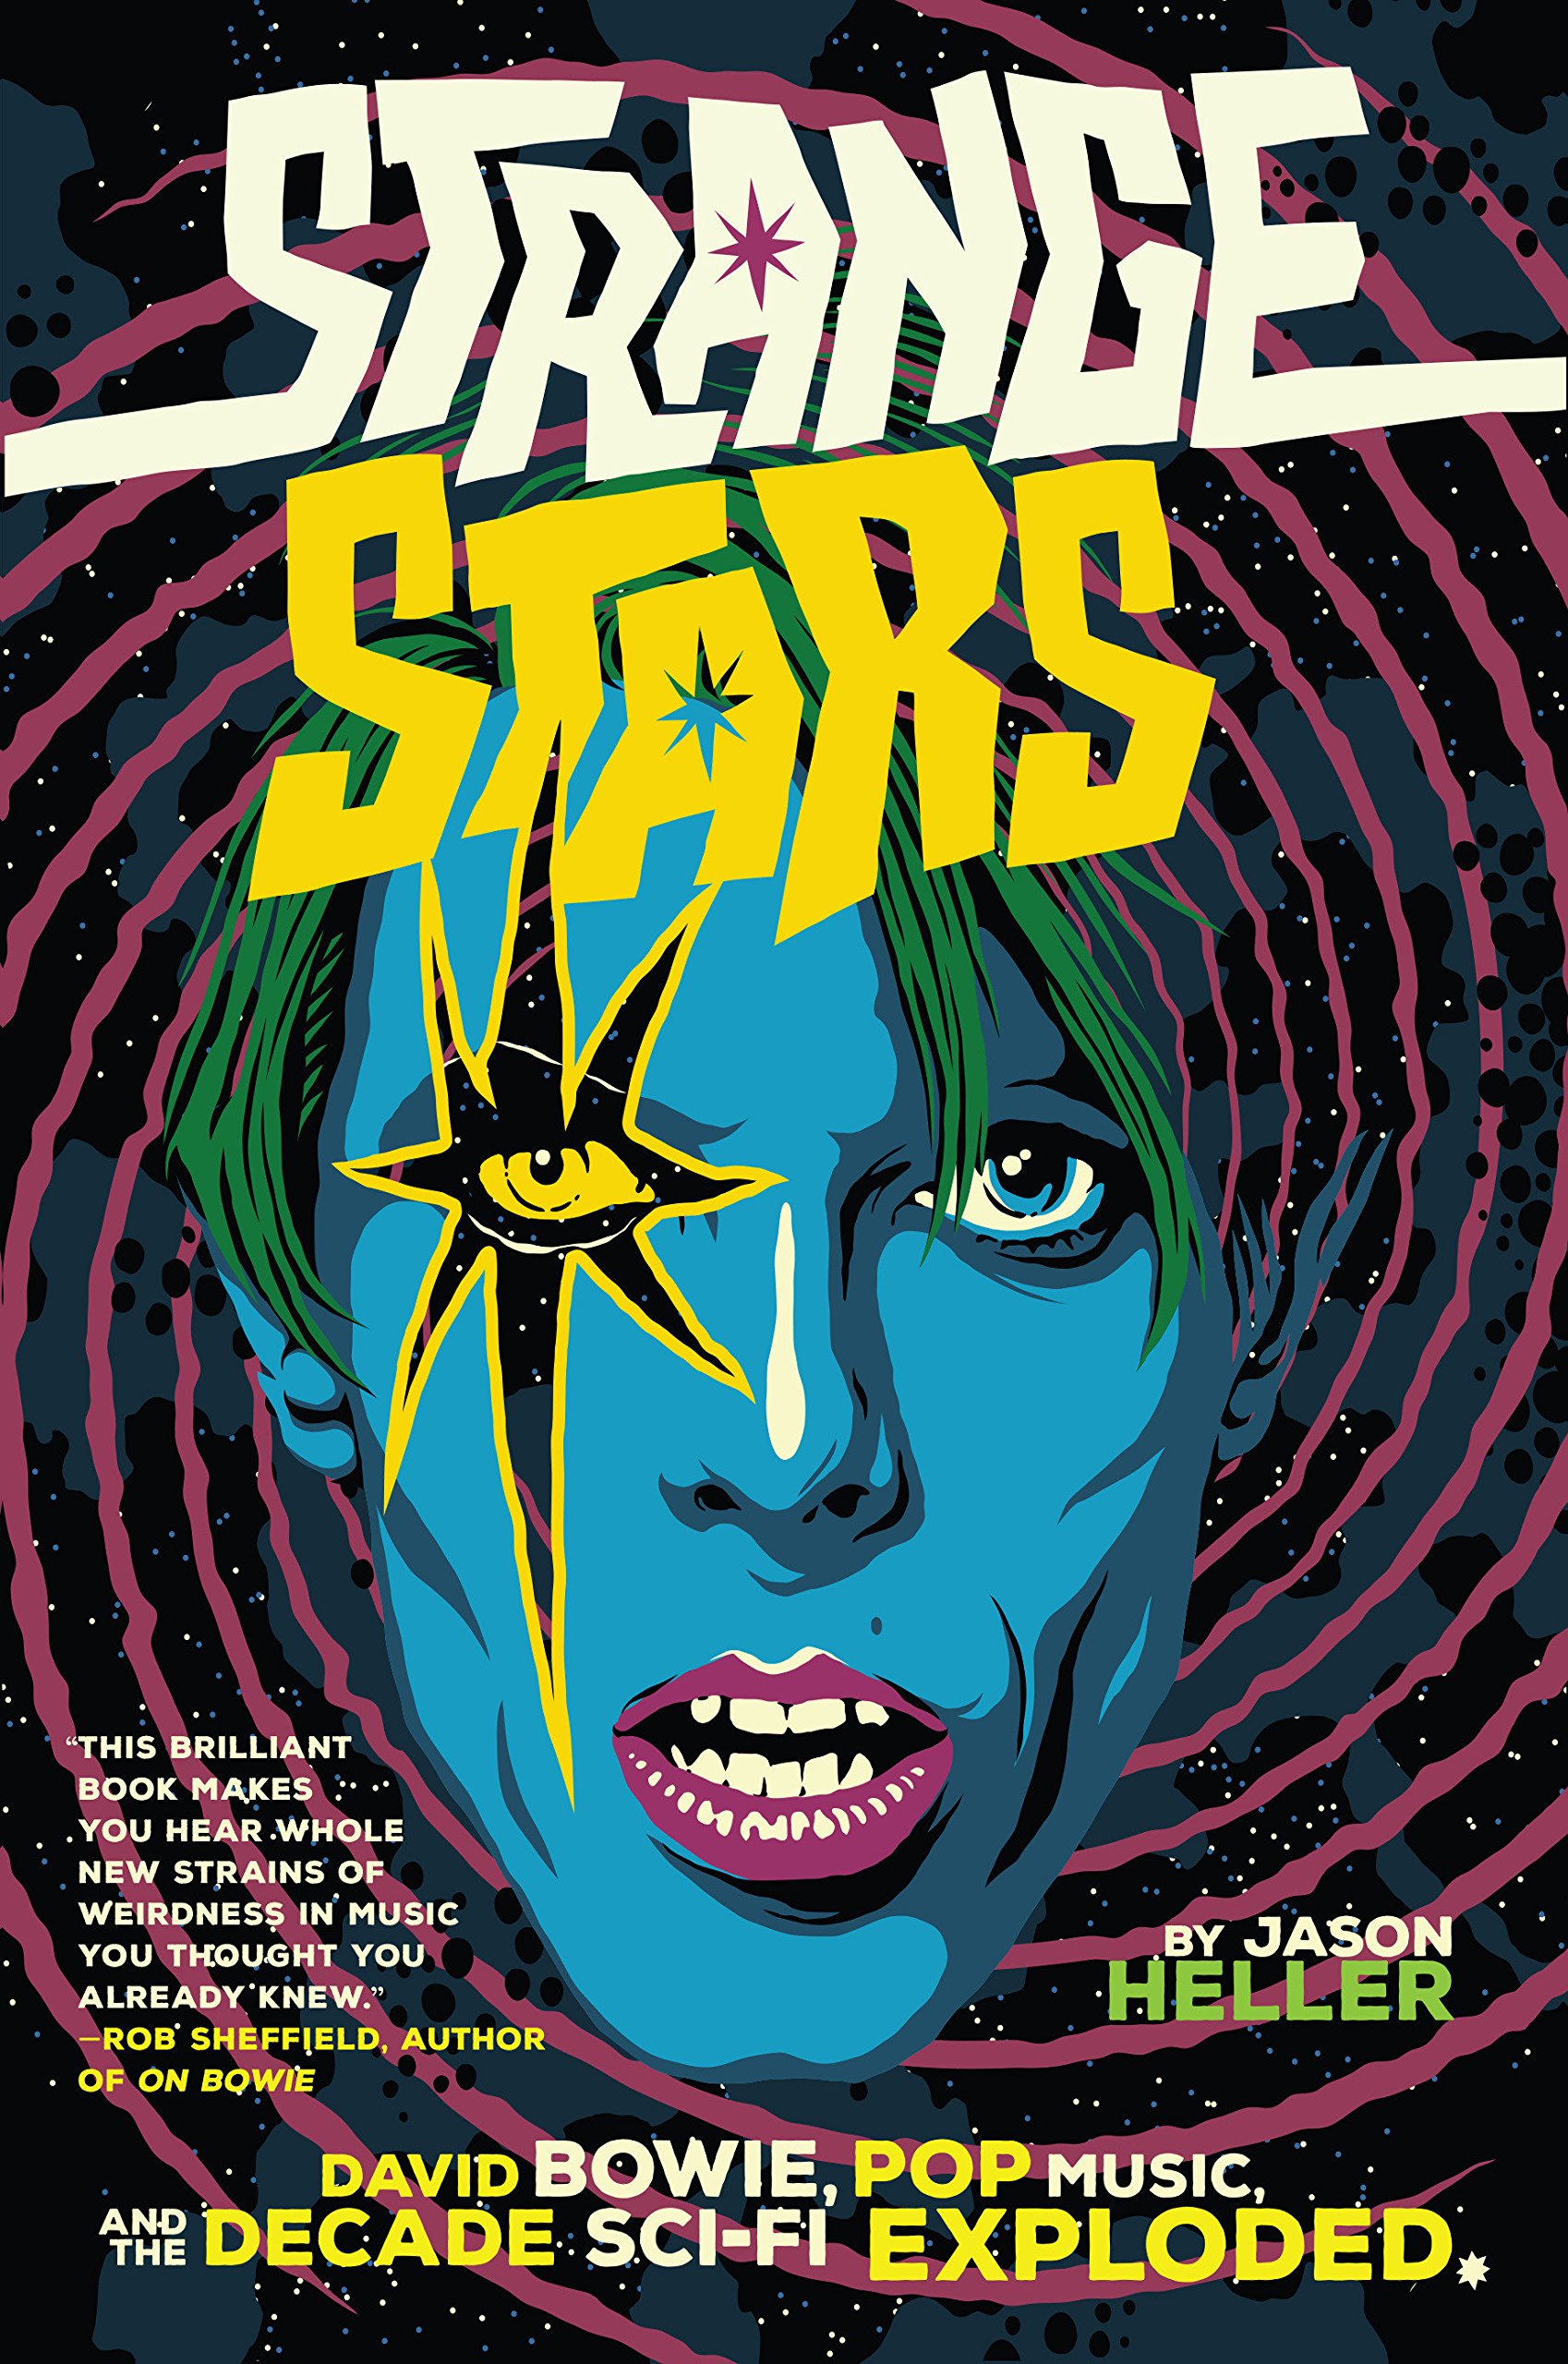 CANCELLED Book Launch: Strange Stars by Jason Heller